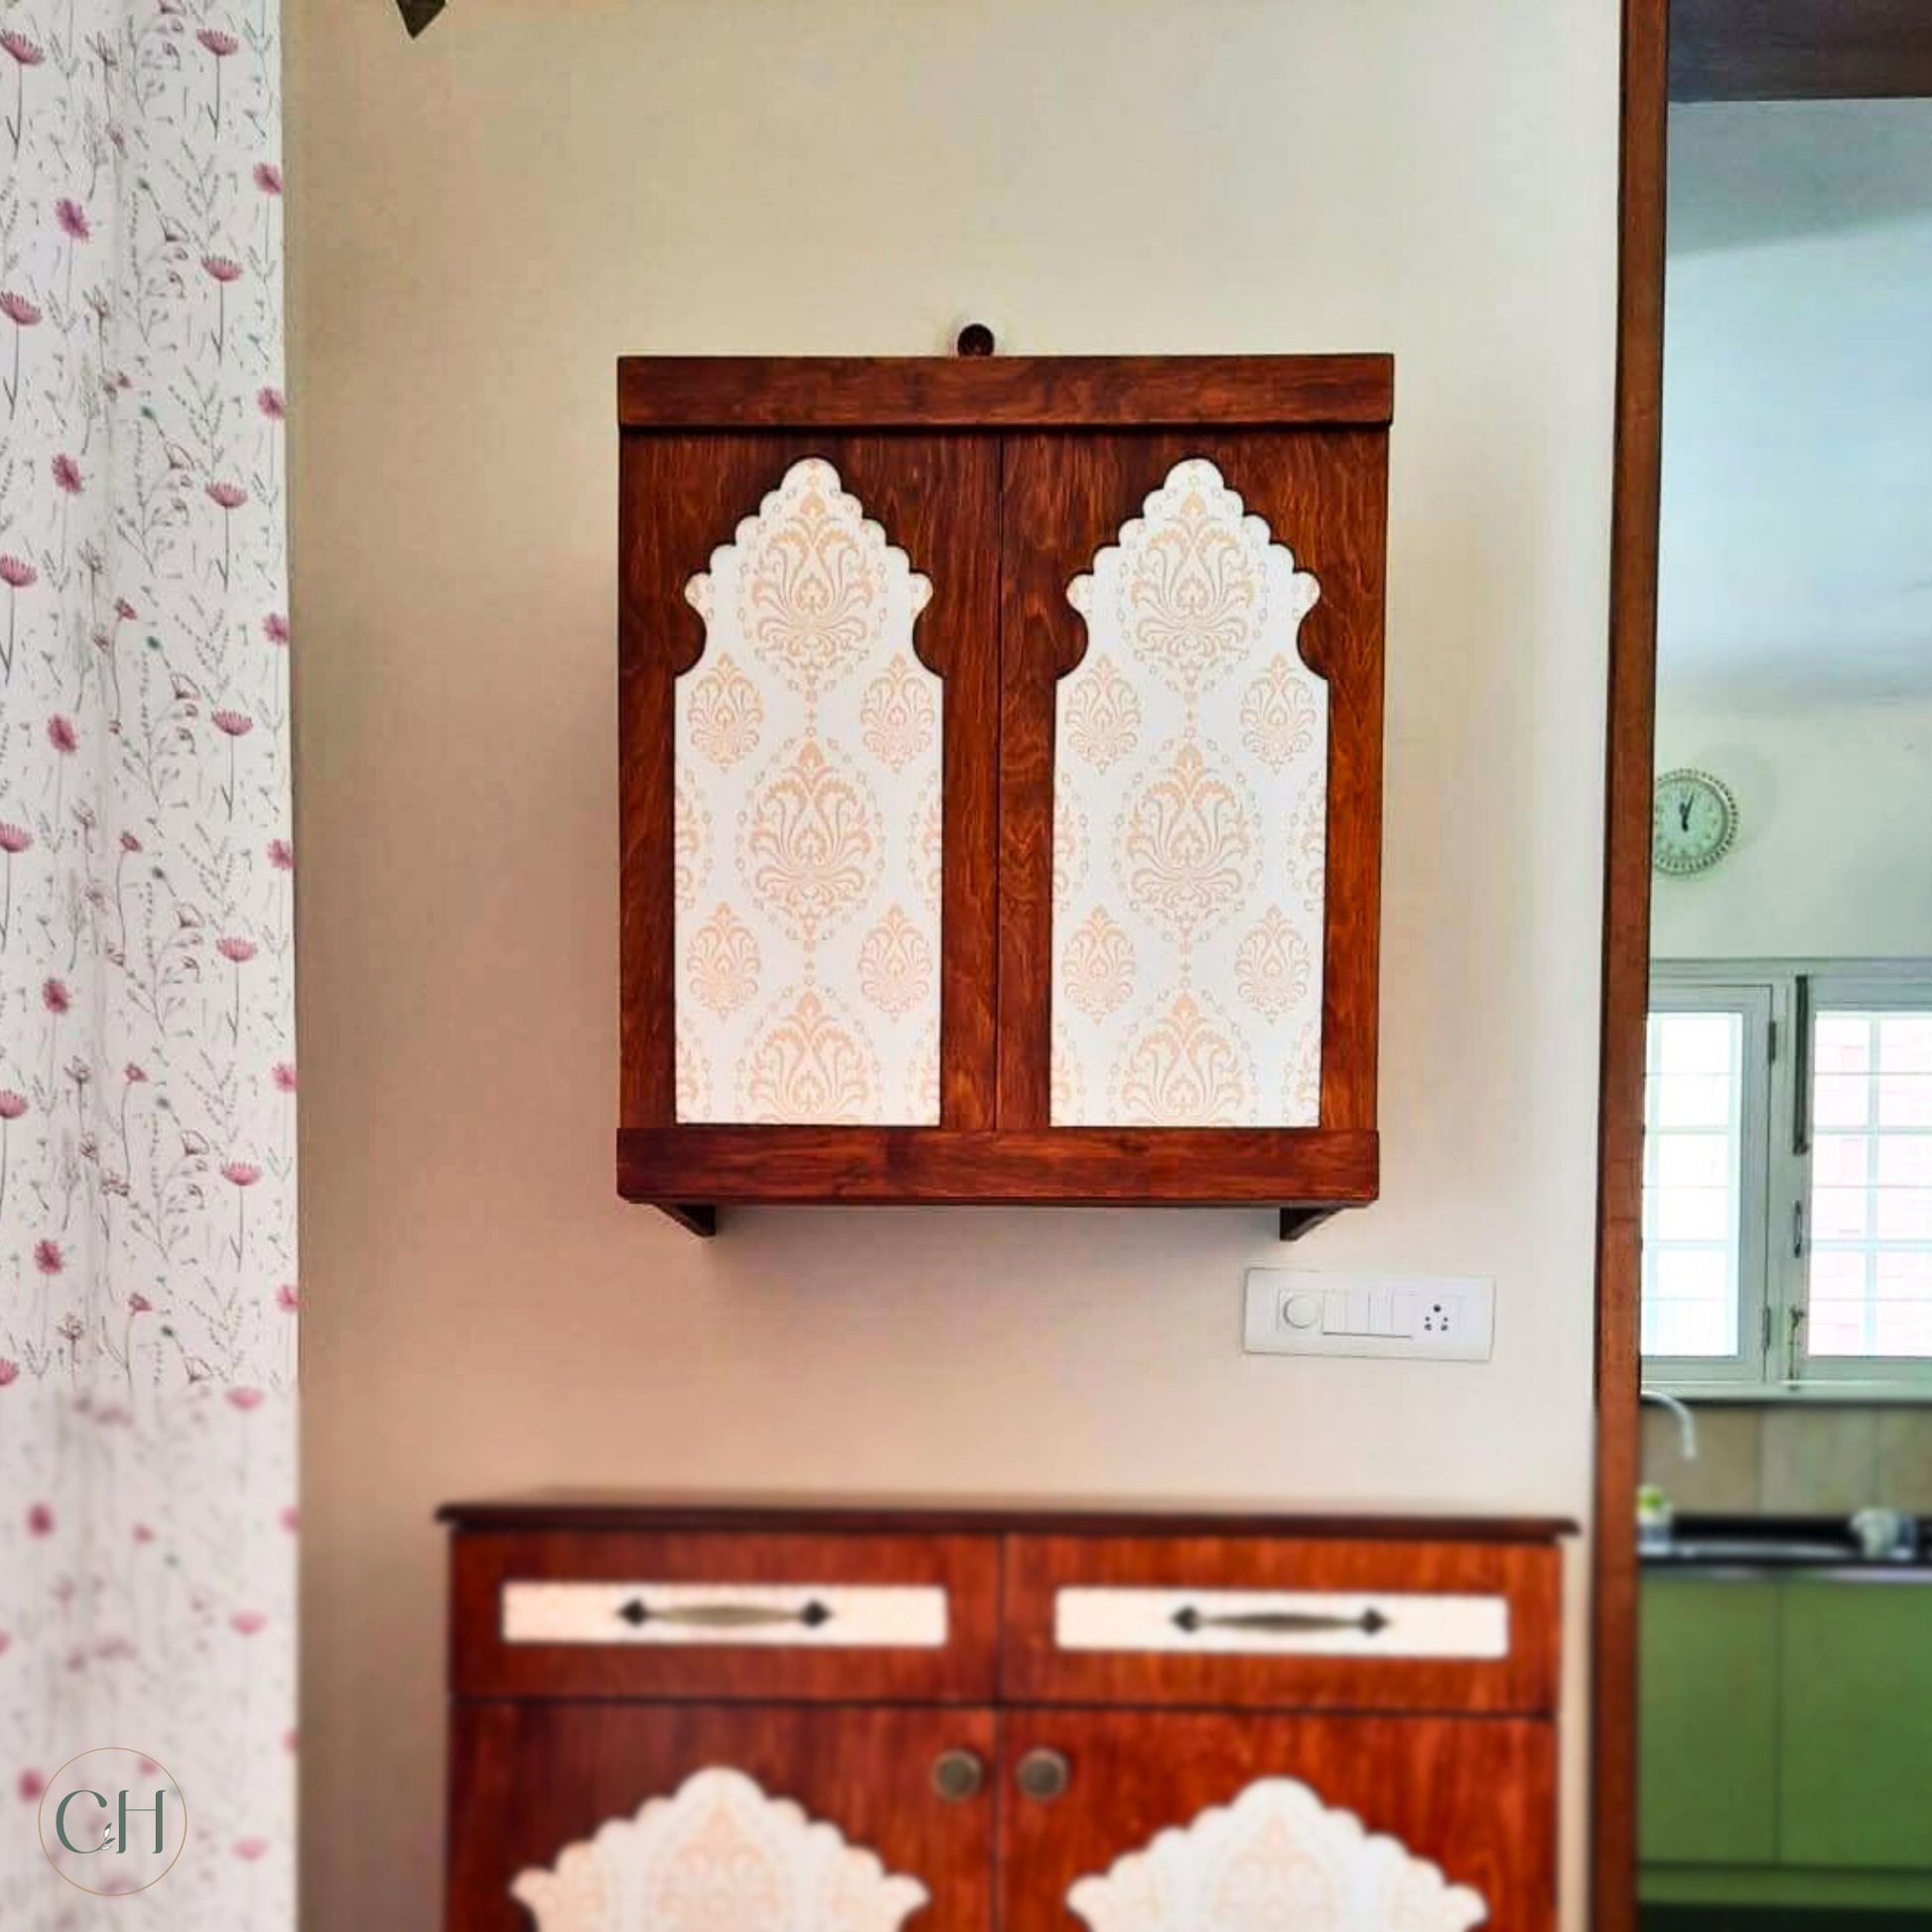 CustHum - wall-mounted compact wooden home puja mandir